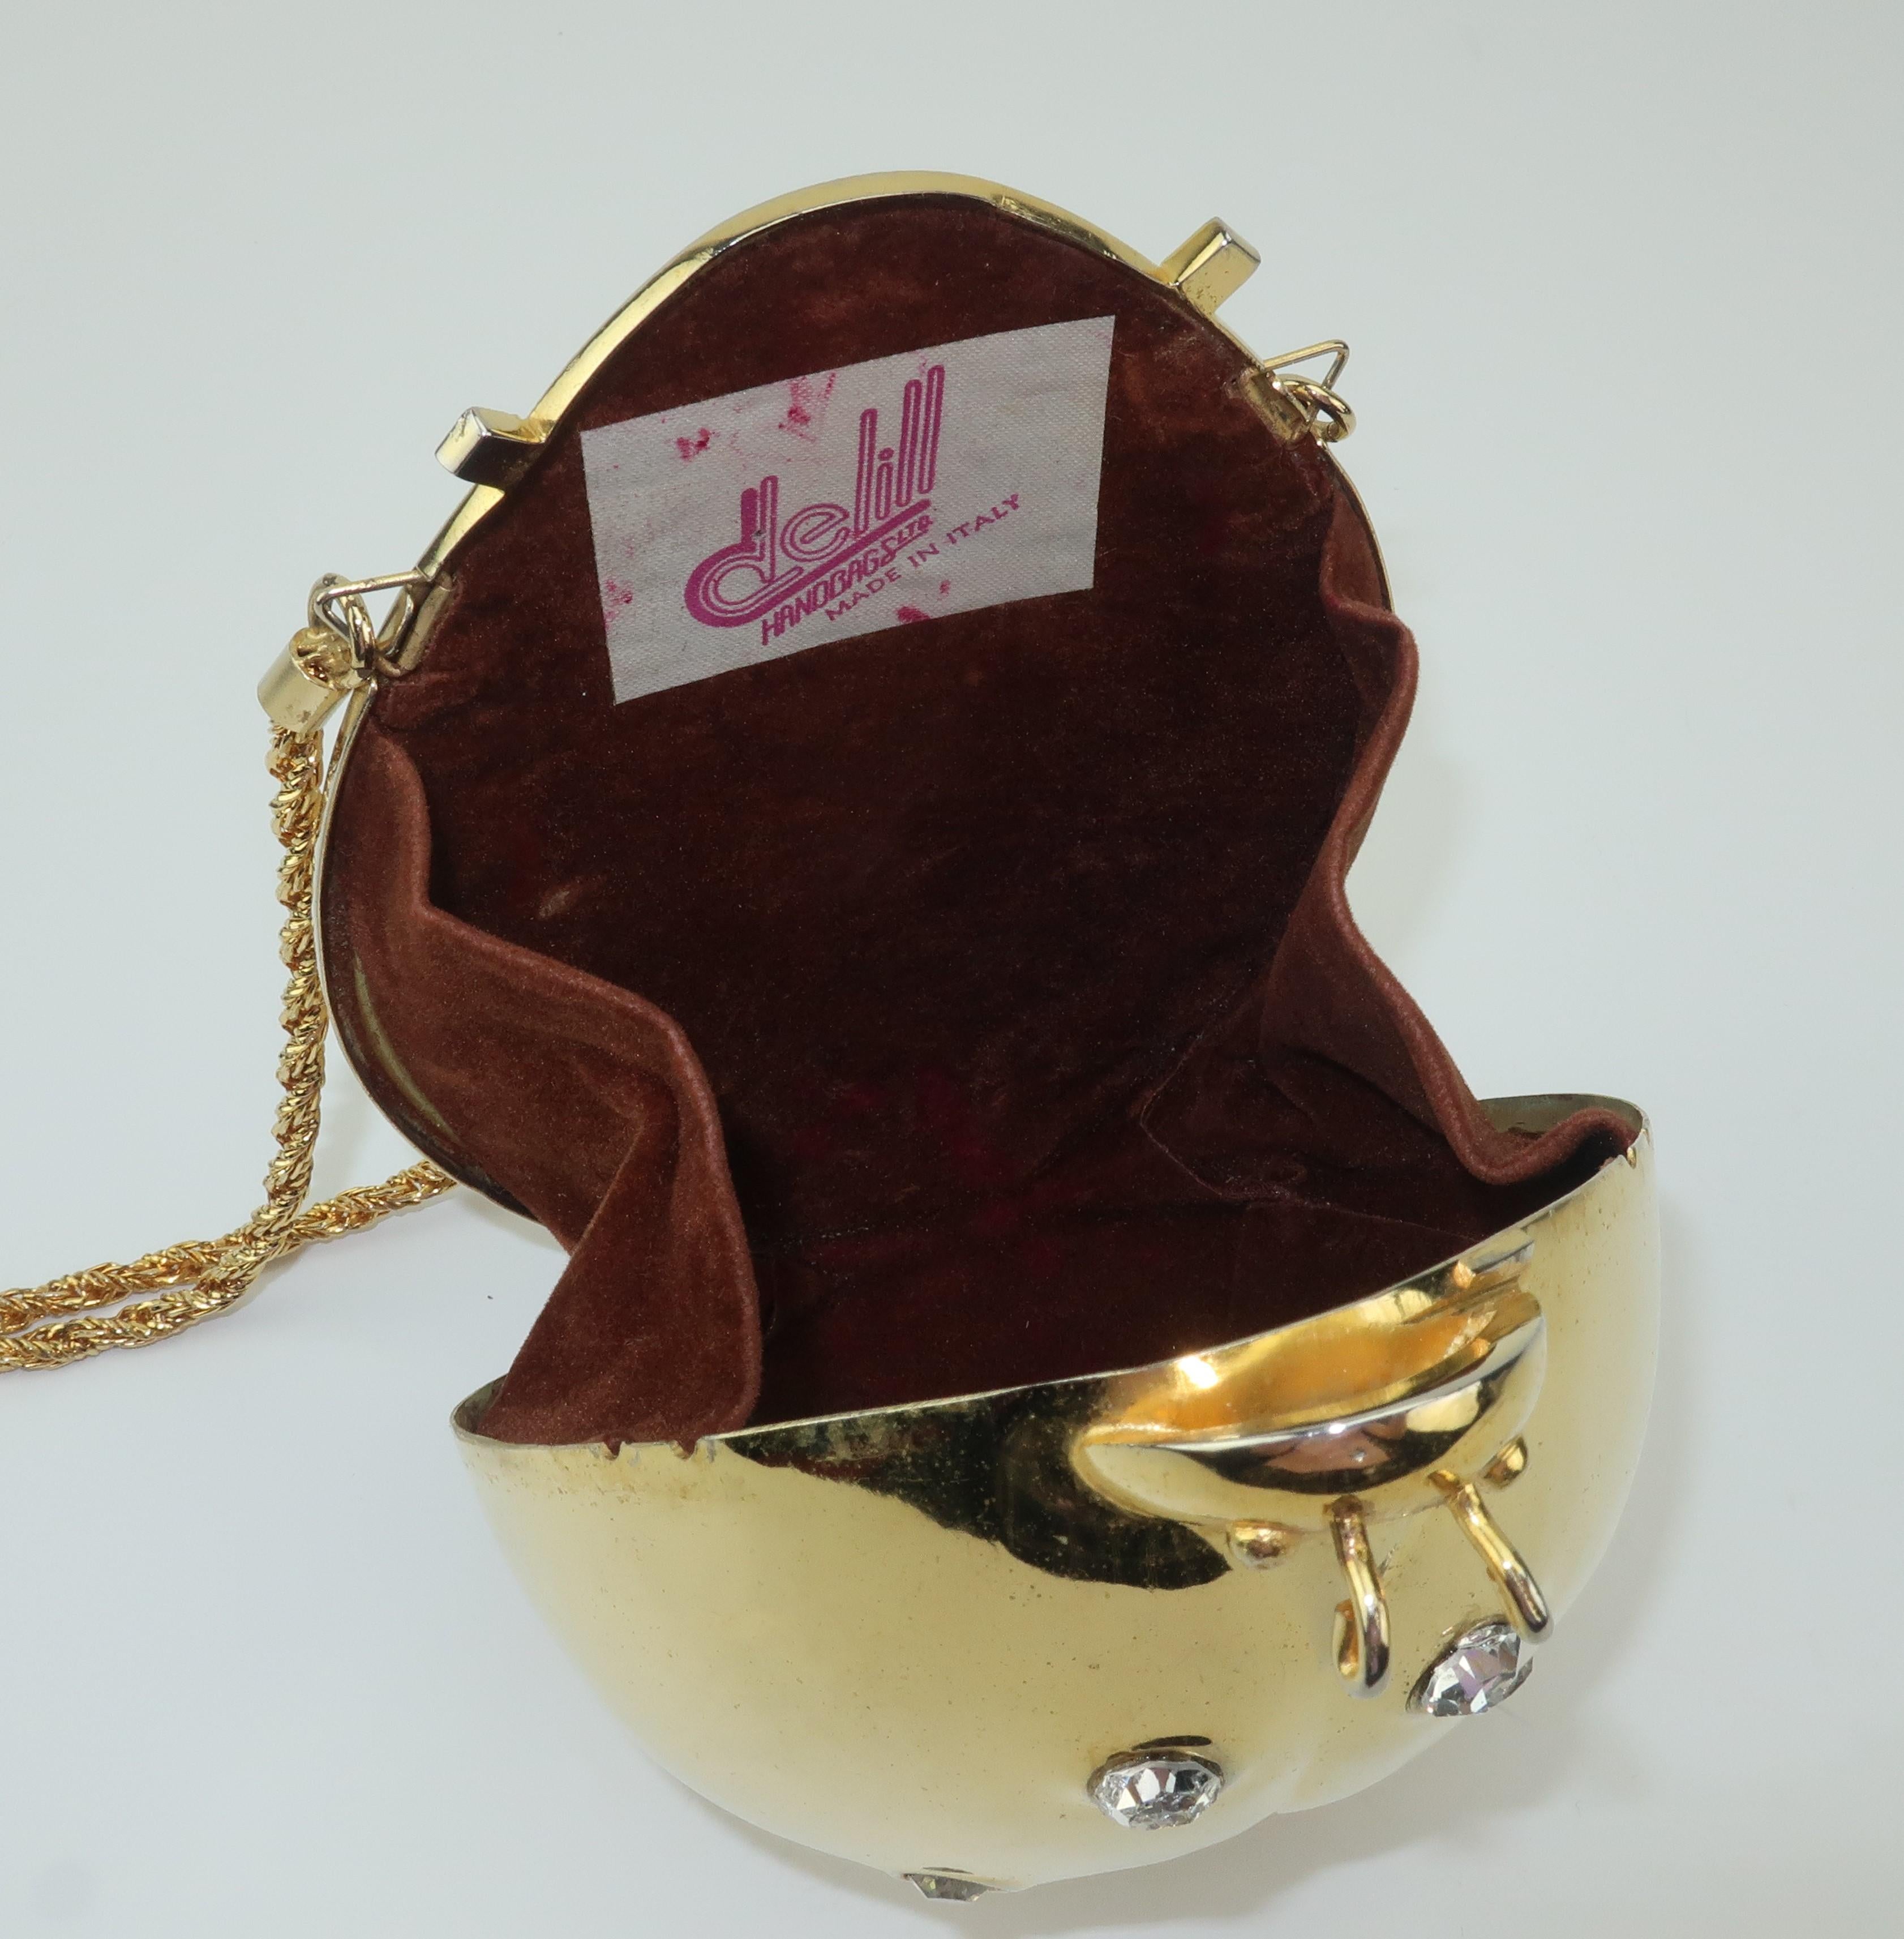 Delill Gold Ladybug Minaudière Handbag With Rhinestones, C.1970 3